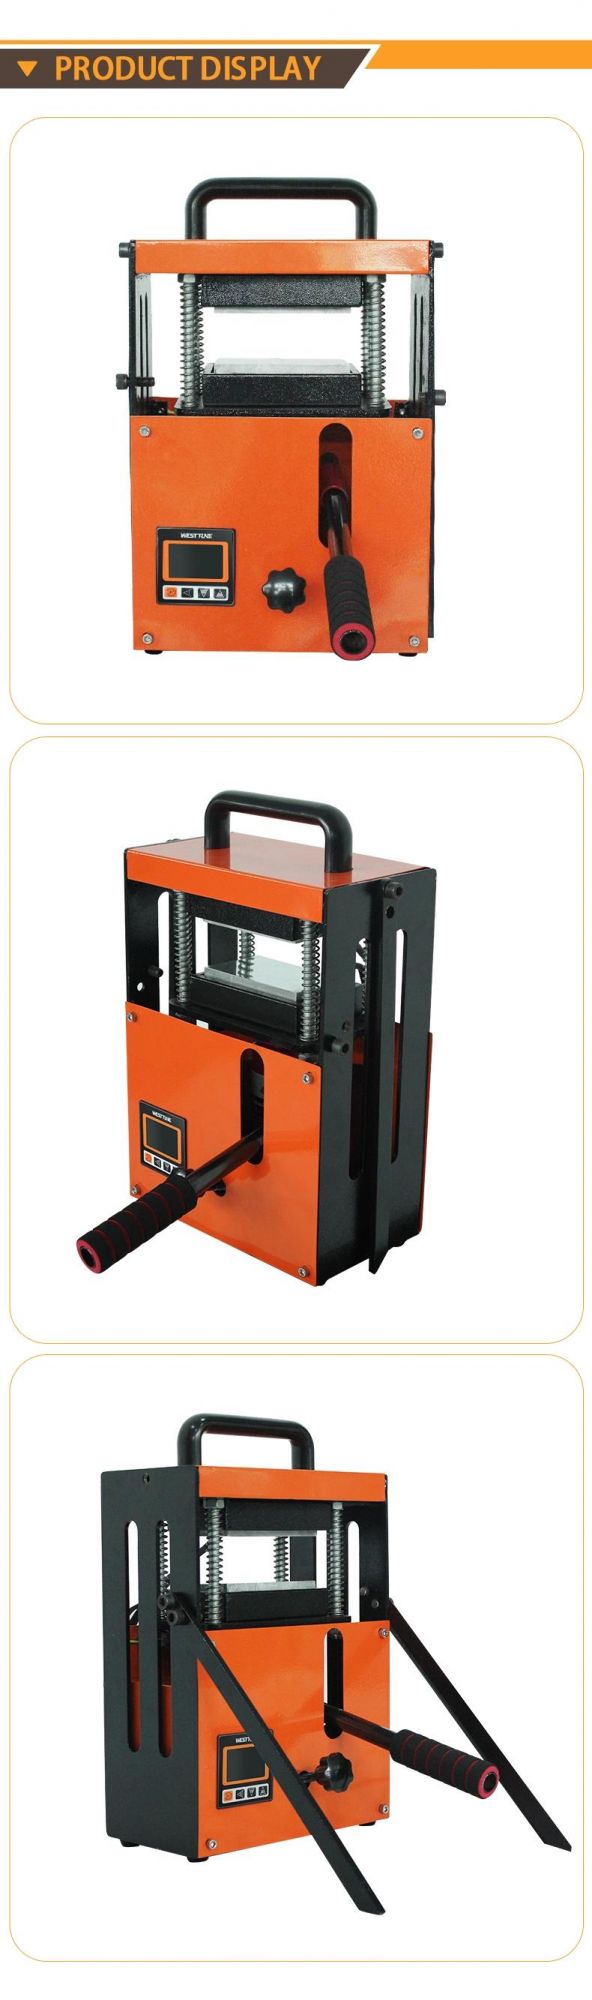 4ton Home Use Small Hemp Rosin Heat Press Machine Kit